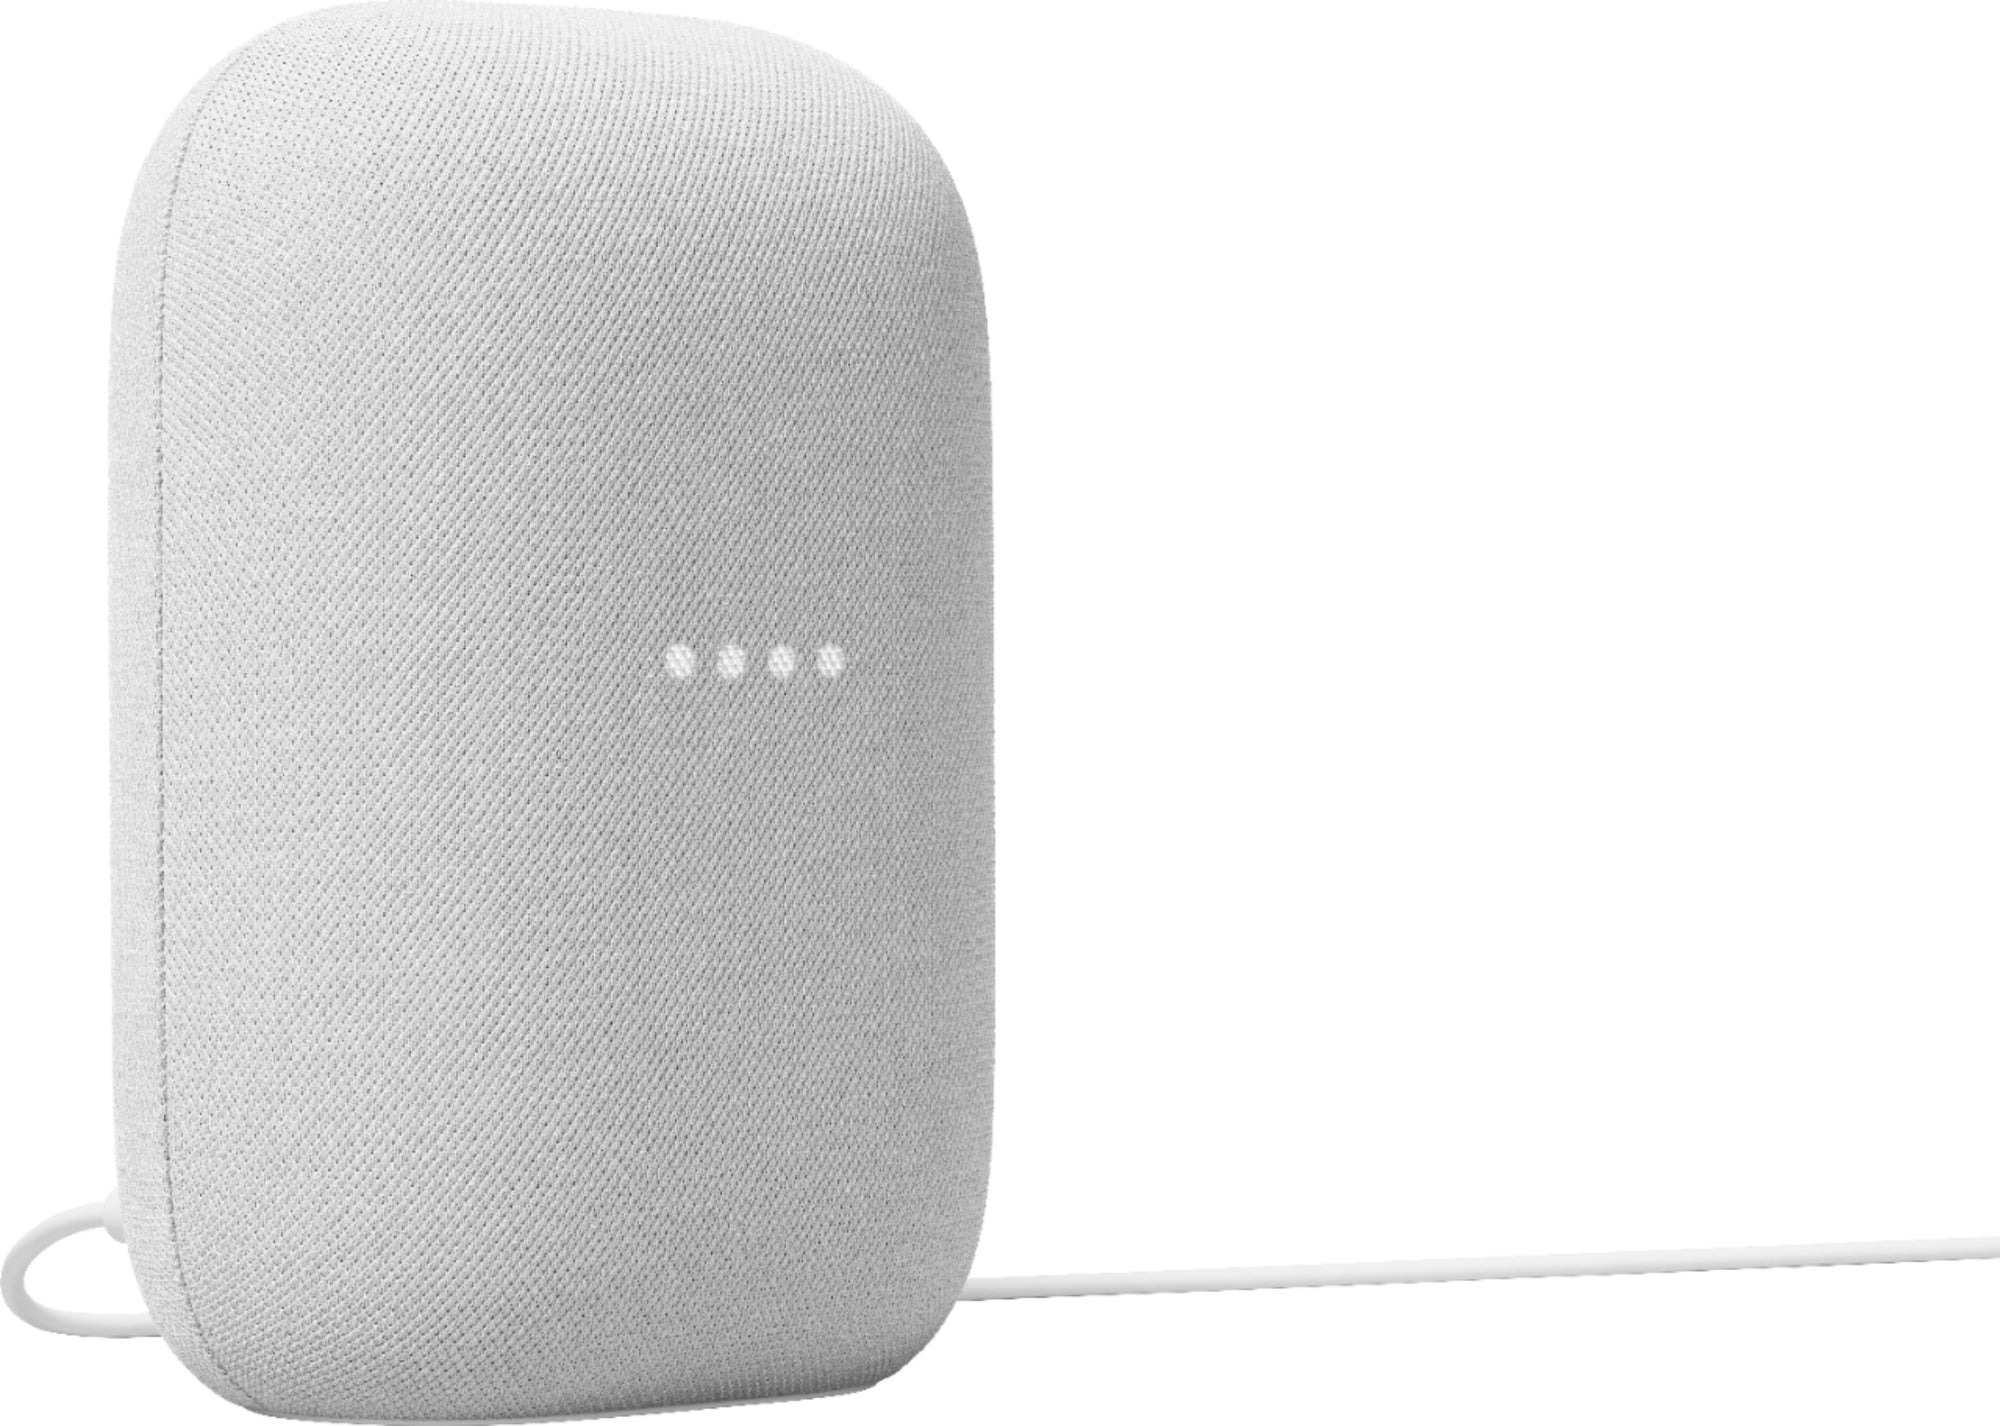 Google - GA01420-US Nest Audio - Smart Speaker - Chalk